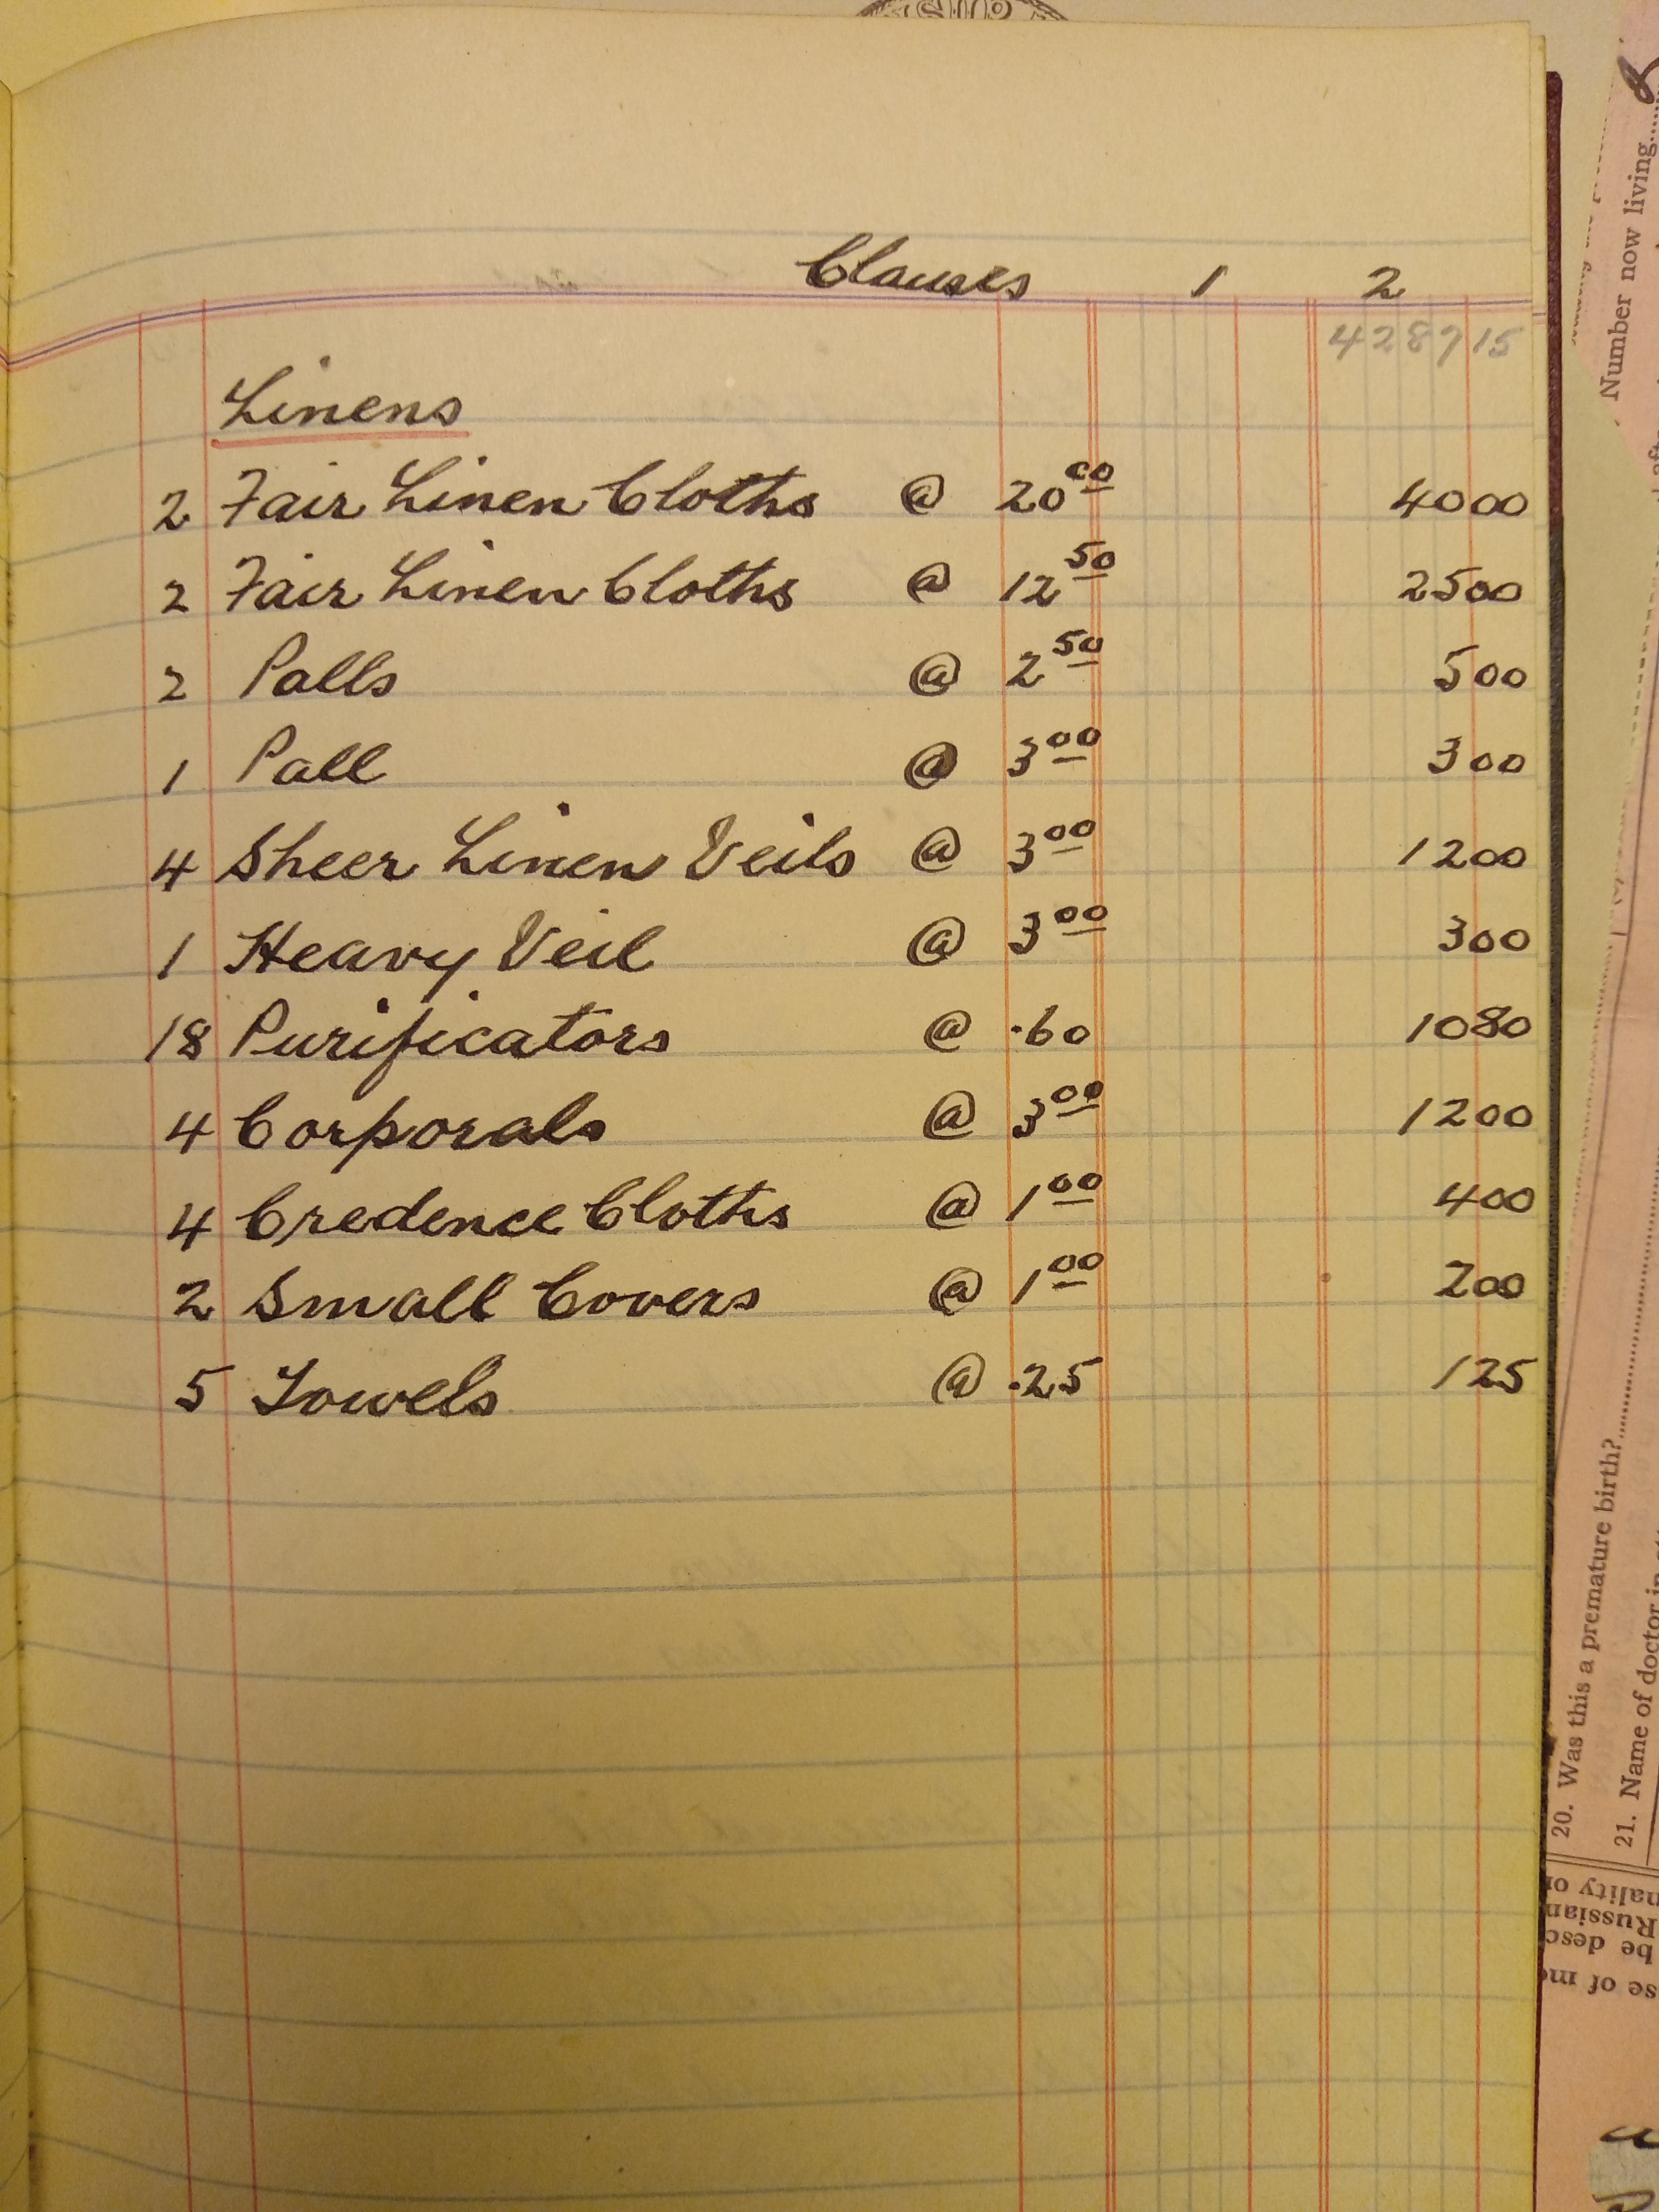 1933 Inventory 3.jpg